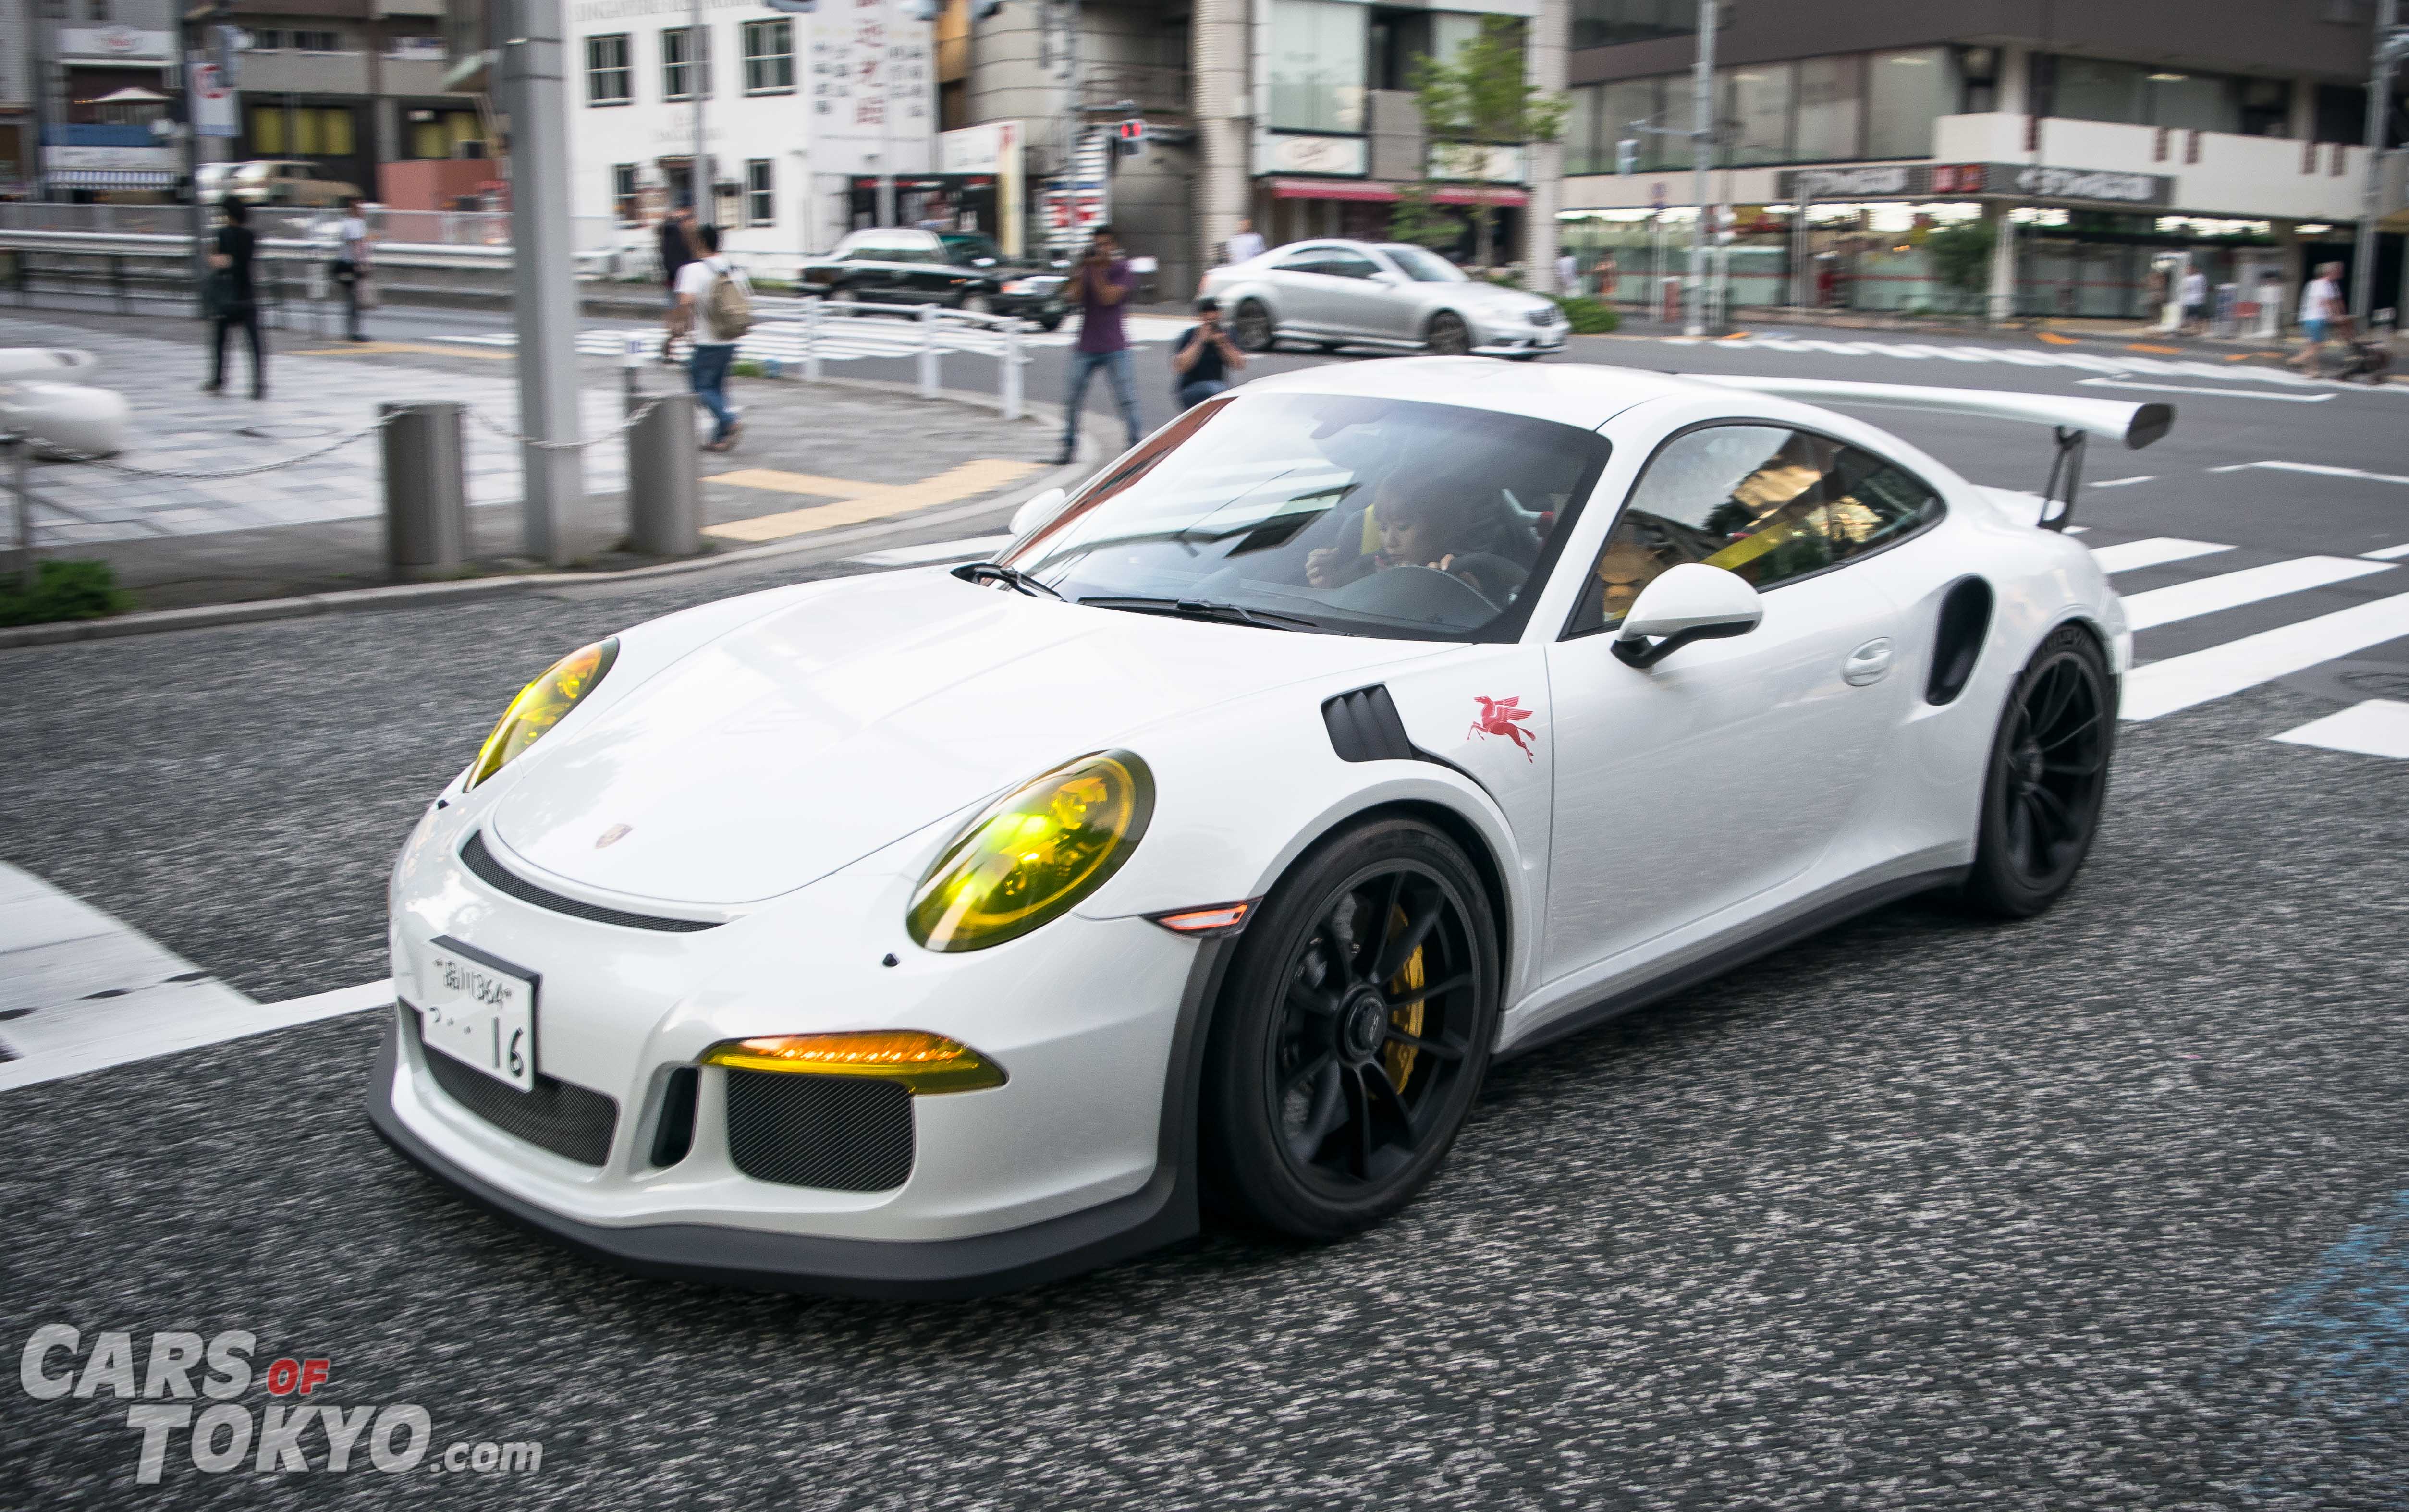 Cars of Tokyo Roppongi Porsche 911 GT3 RS